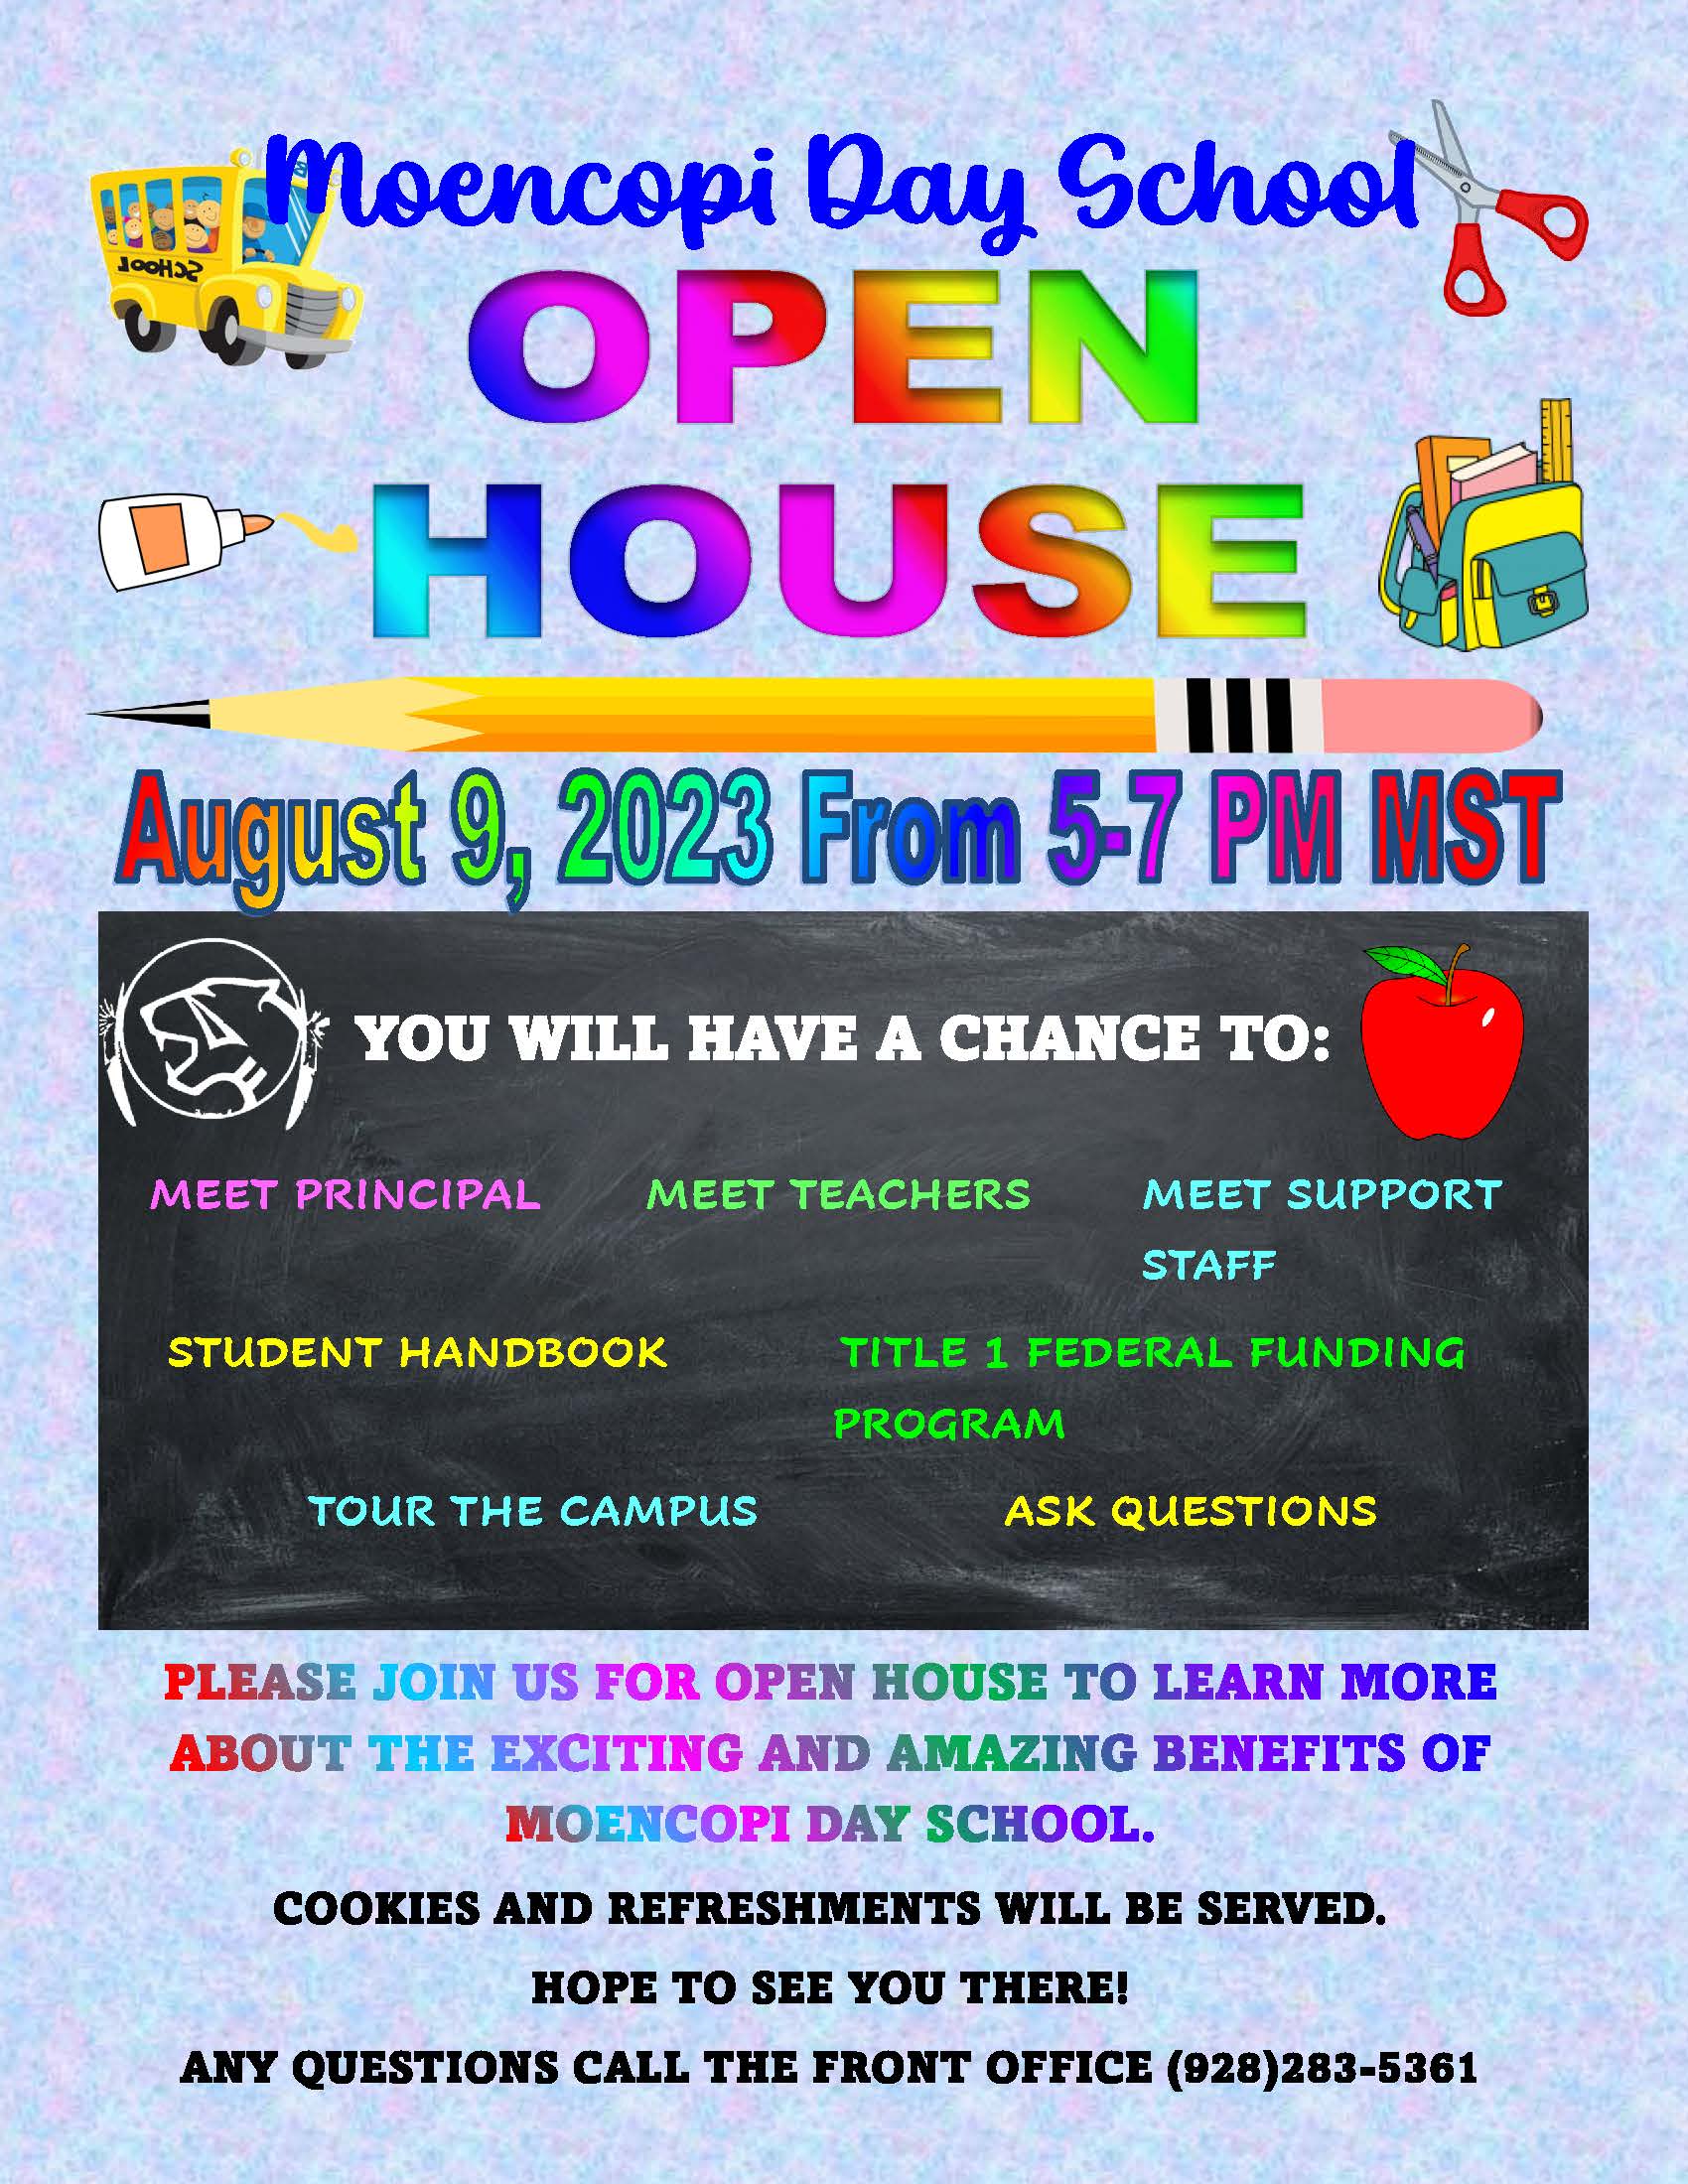 Moencopi day school open house flyer